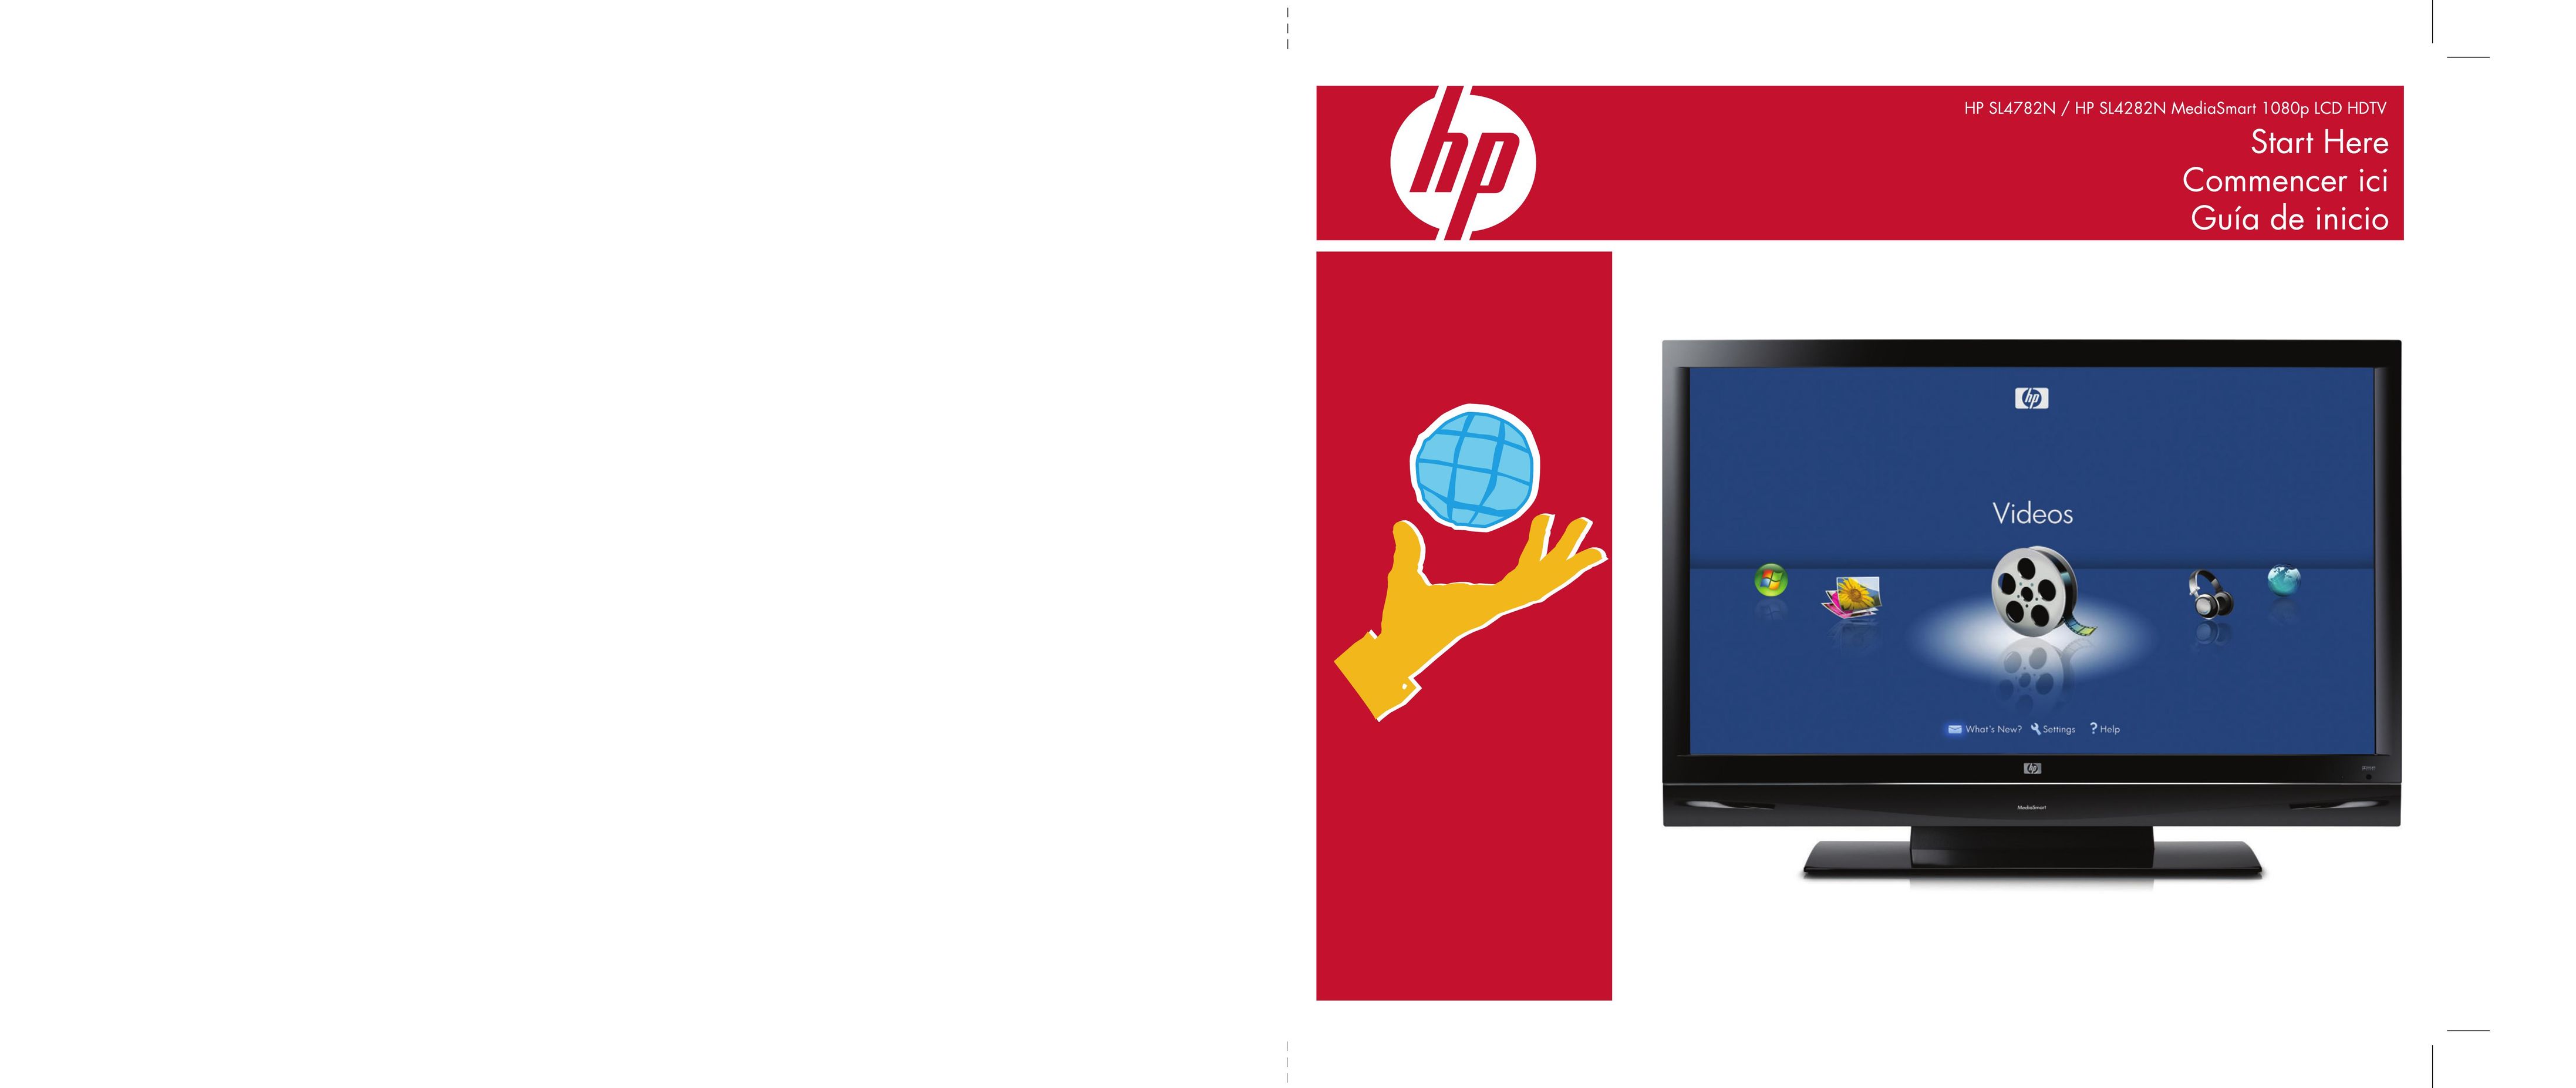 HP (Hewlett-Packard) HP SL4282N Flat Panel Television User Manual